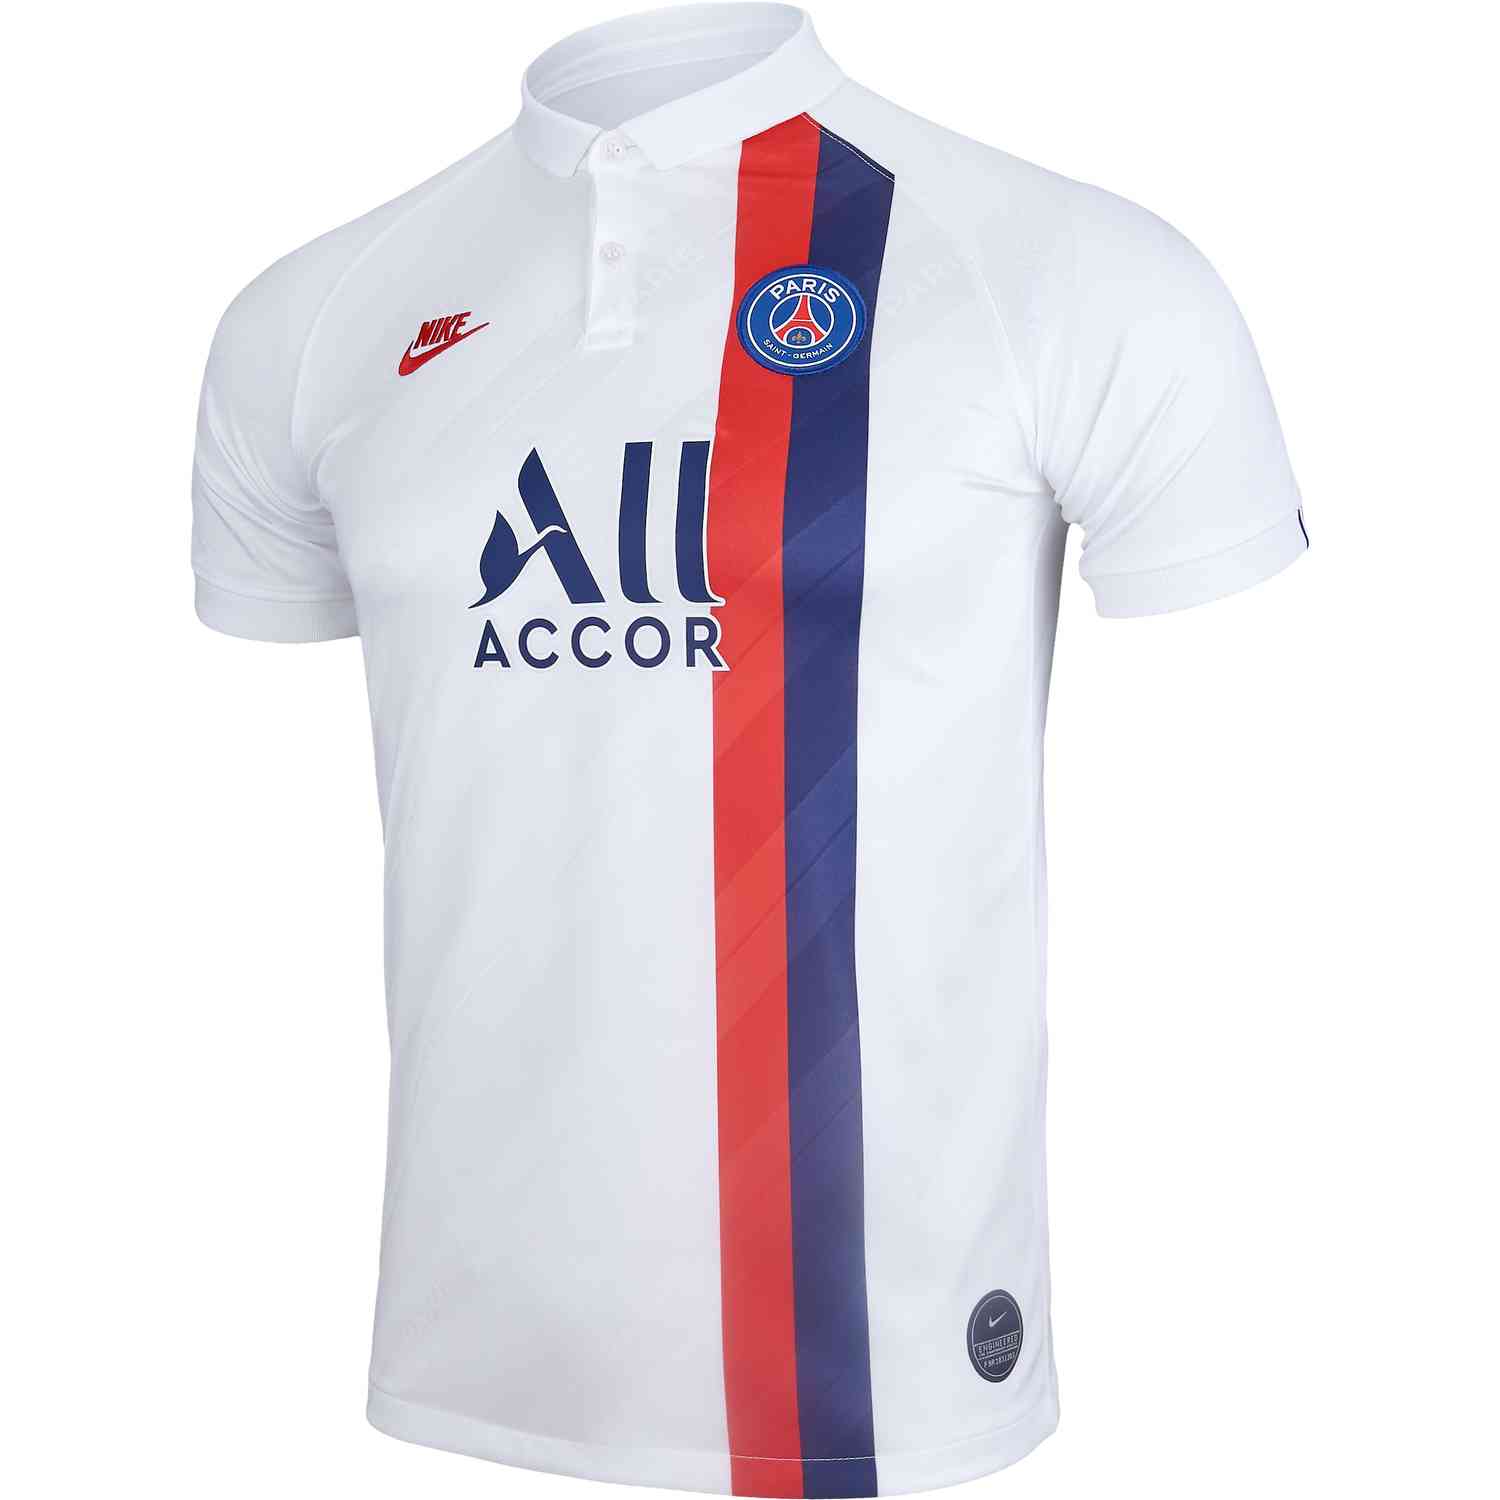 Mbappe Psg Jersey - New Mbappe PSG Paris Soccer Jersey | Psg, Soccer ...